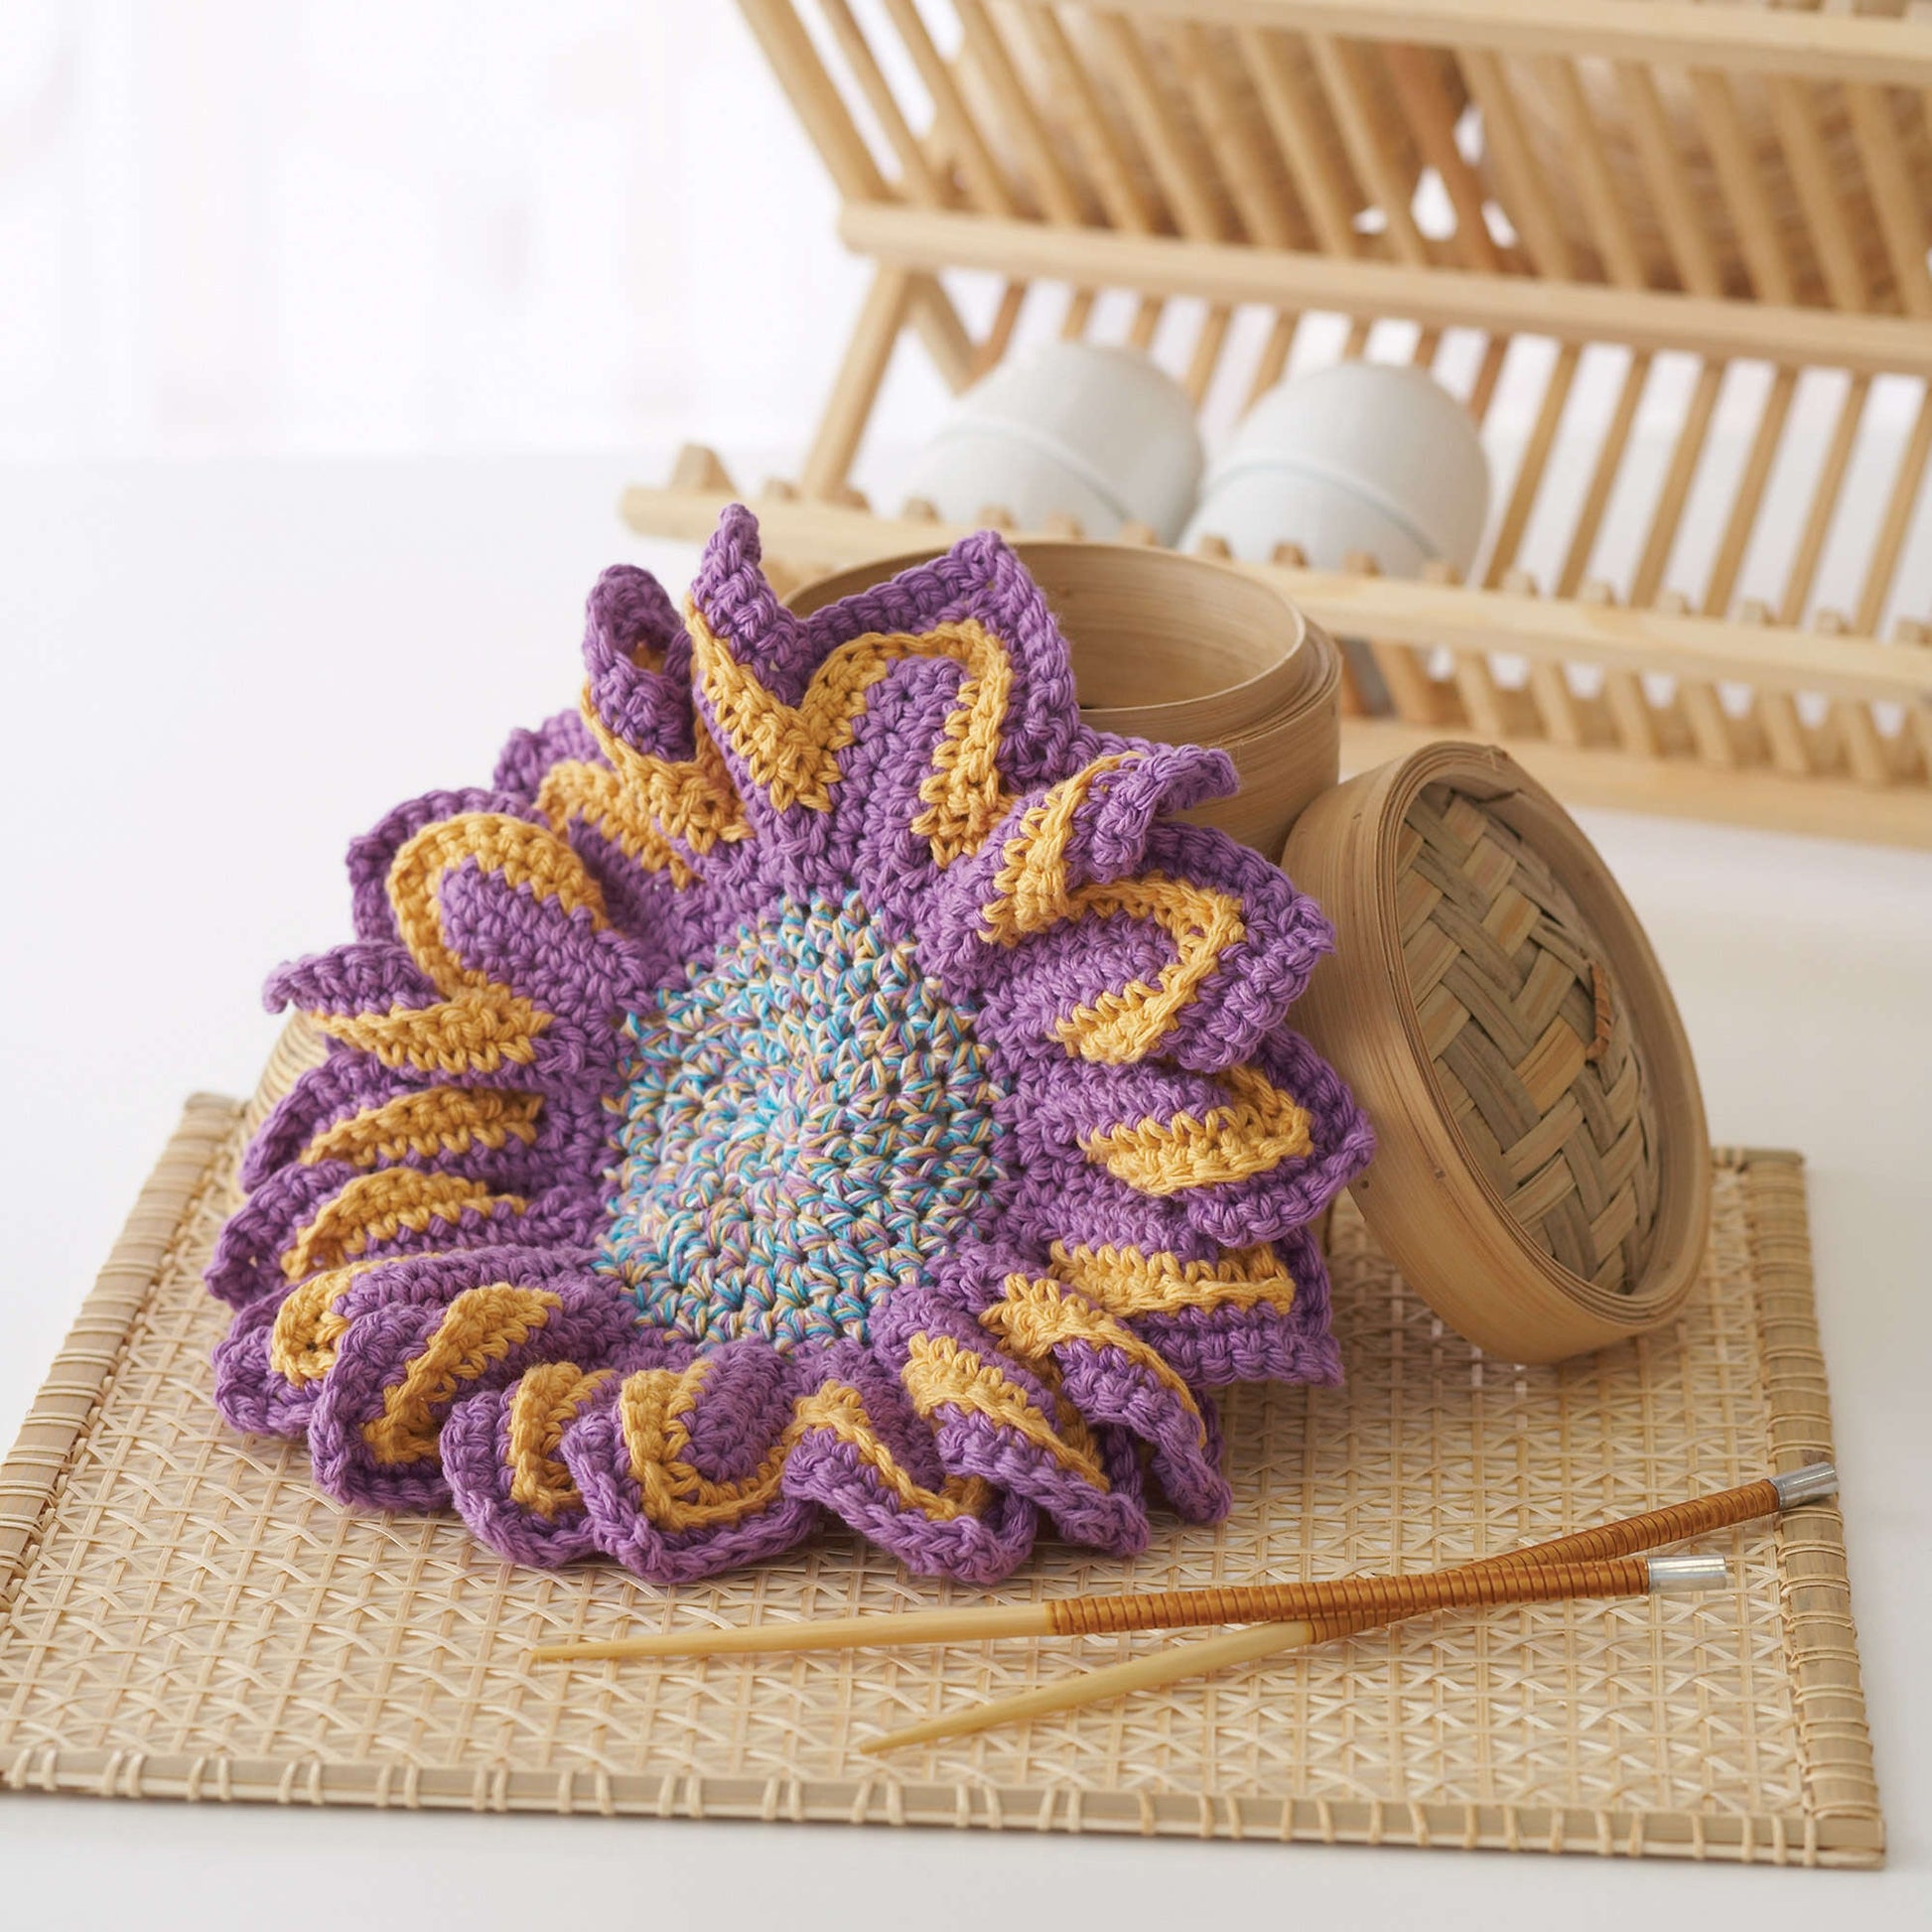 Bernat Plum Blossom Dishcloth Crochet Dishcloth made in Bernat Handicrafter Cotton yarn